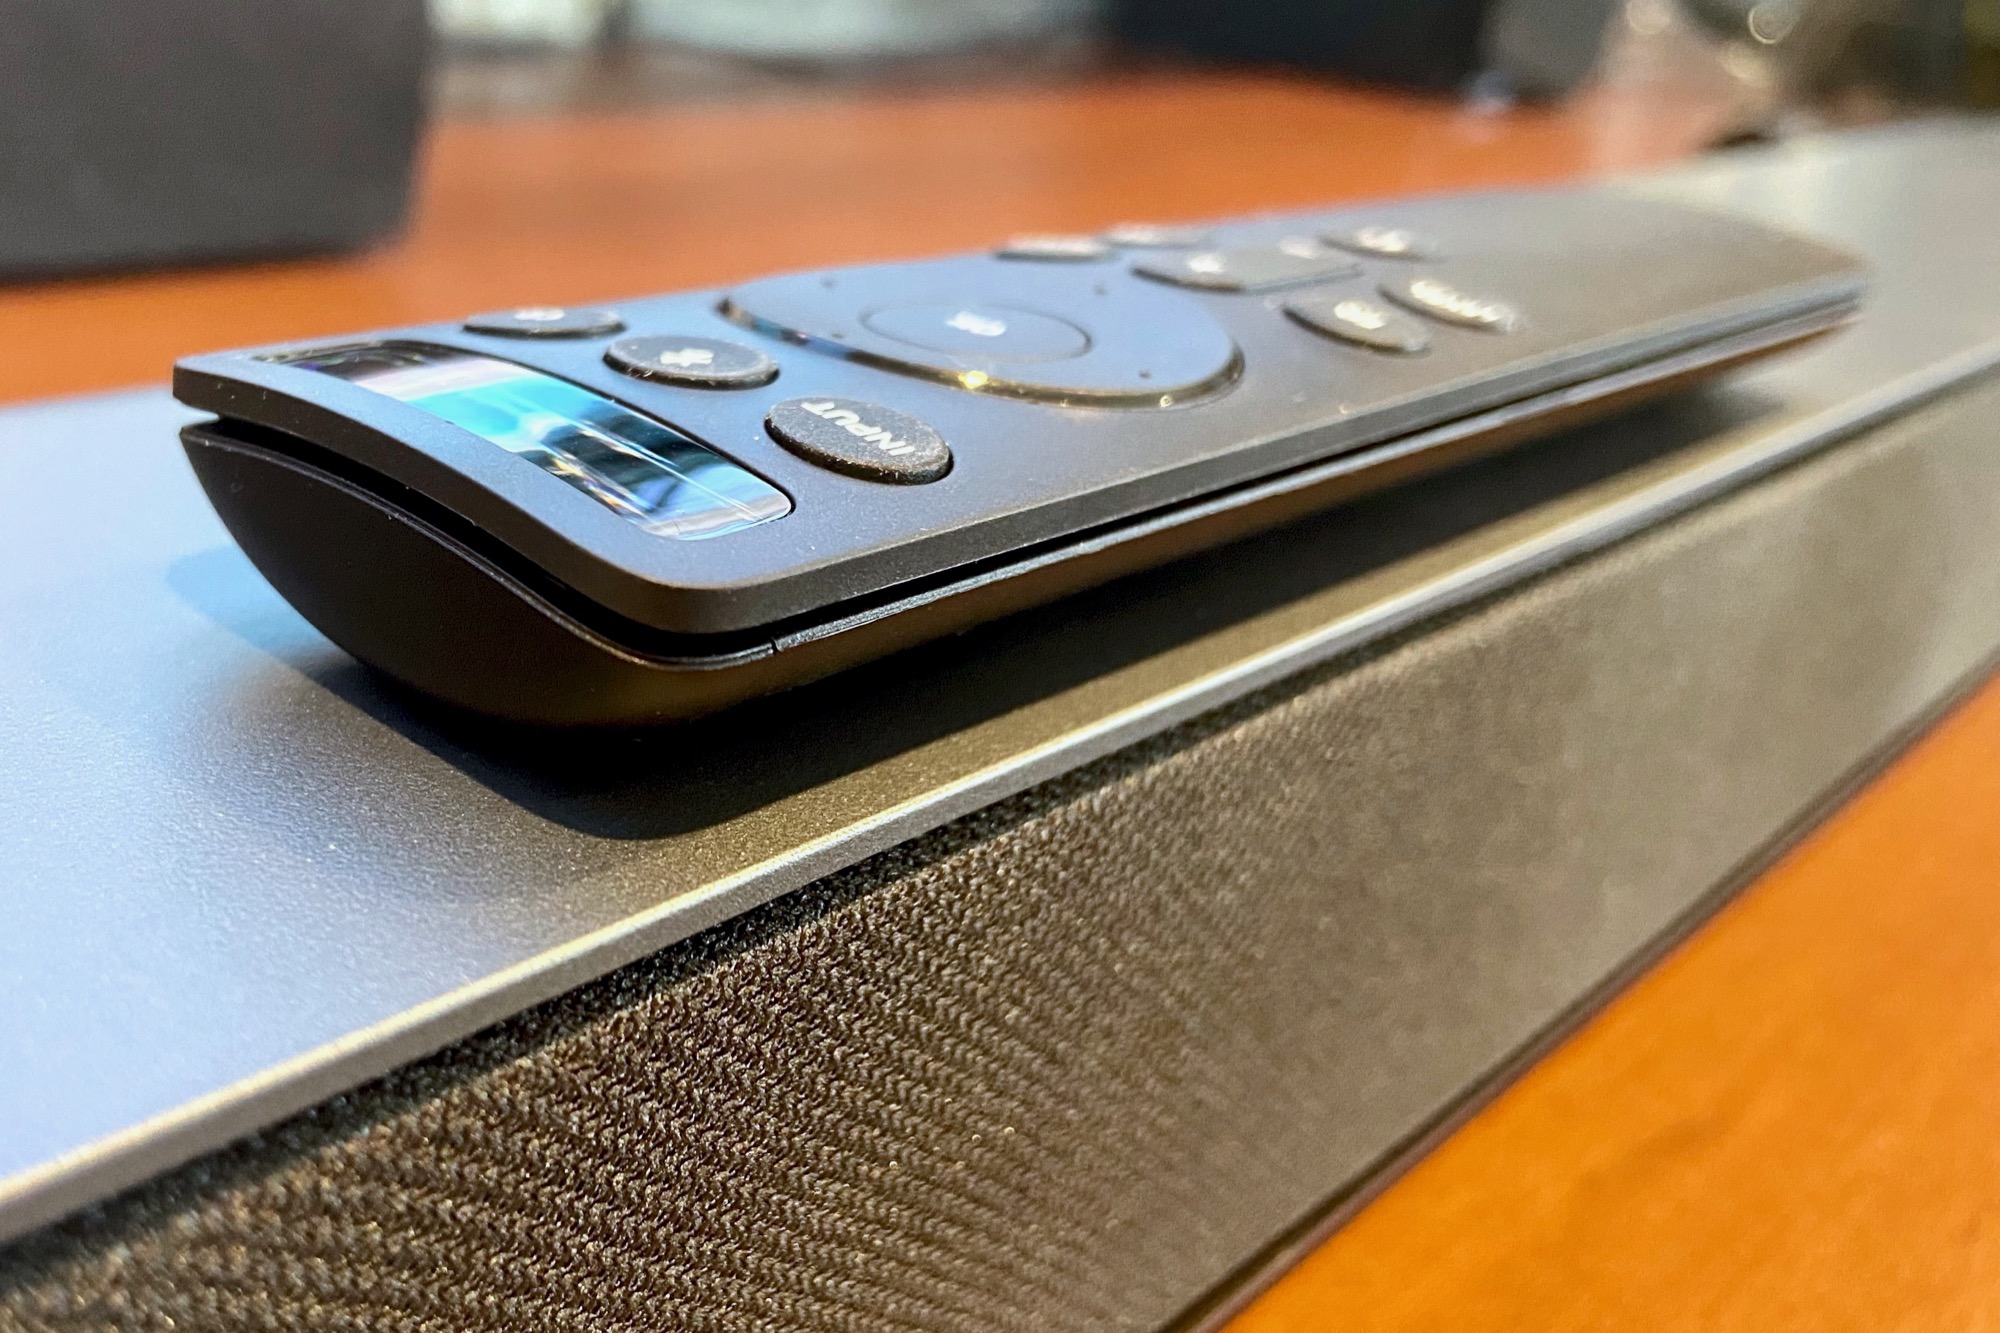 Vizio M-Series 2.1 soundbar seen with its included remote.